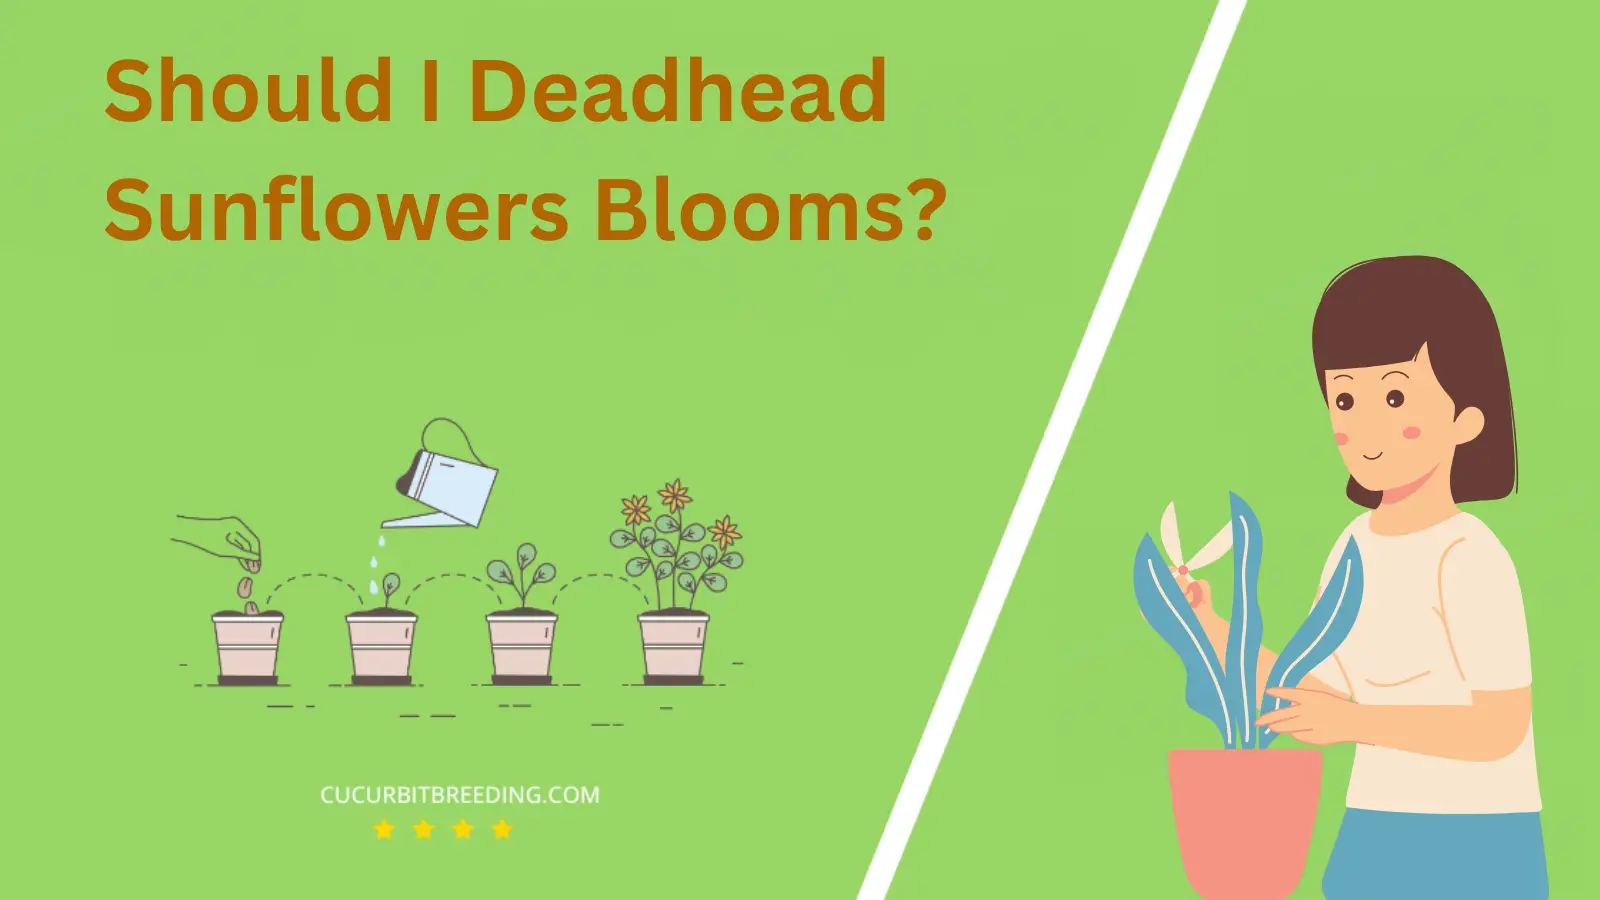 Should I Deadhead Sunflowers Blooms?